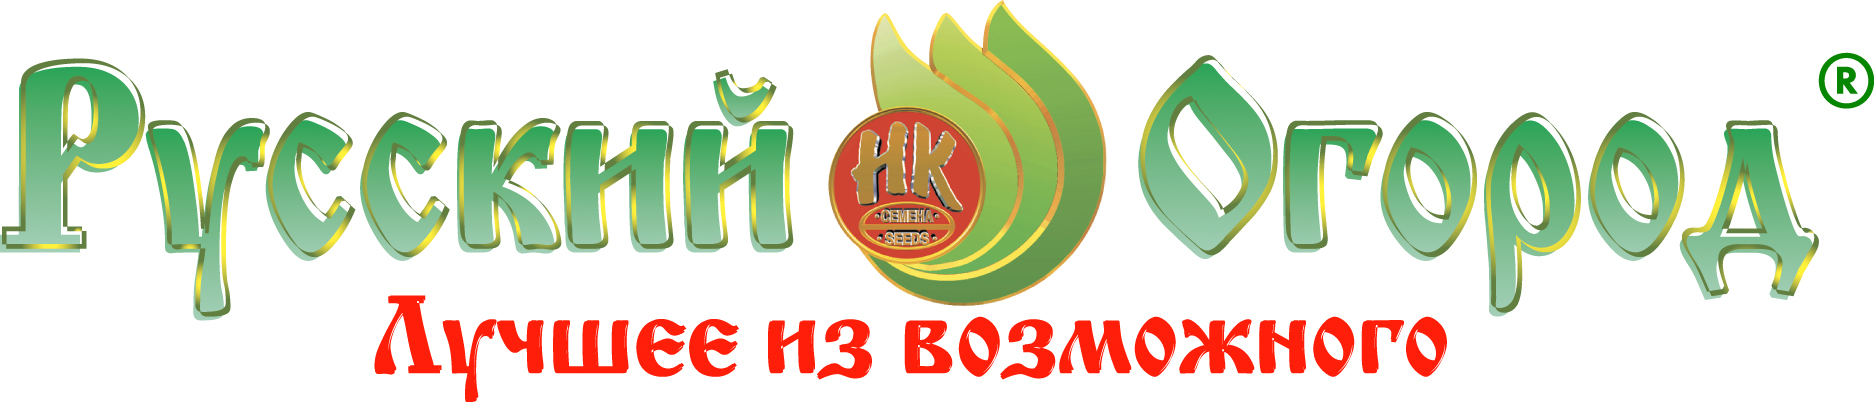 rr logo 3